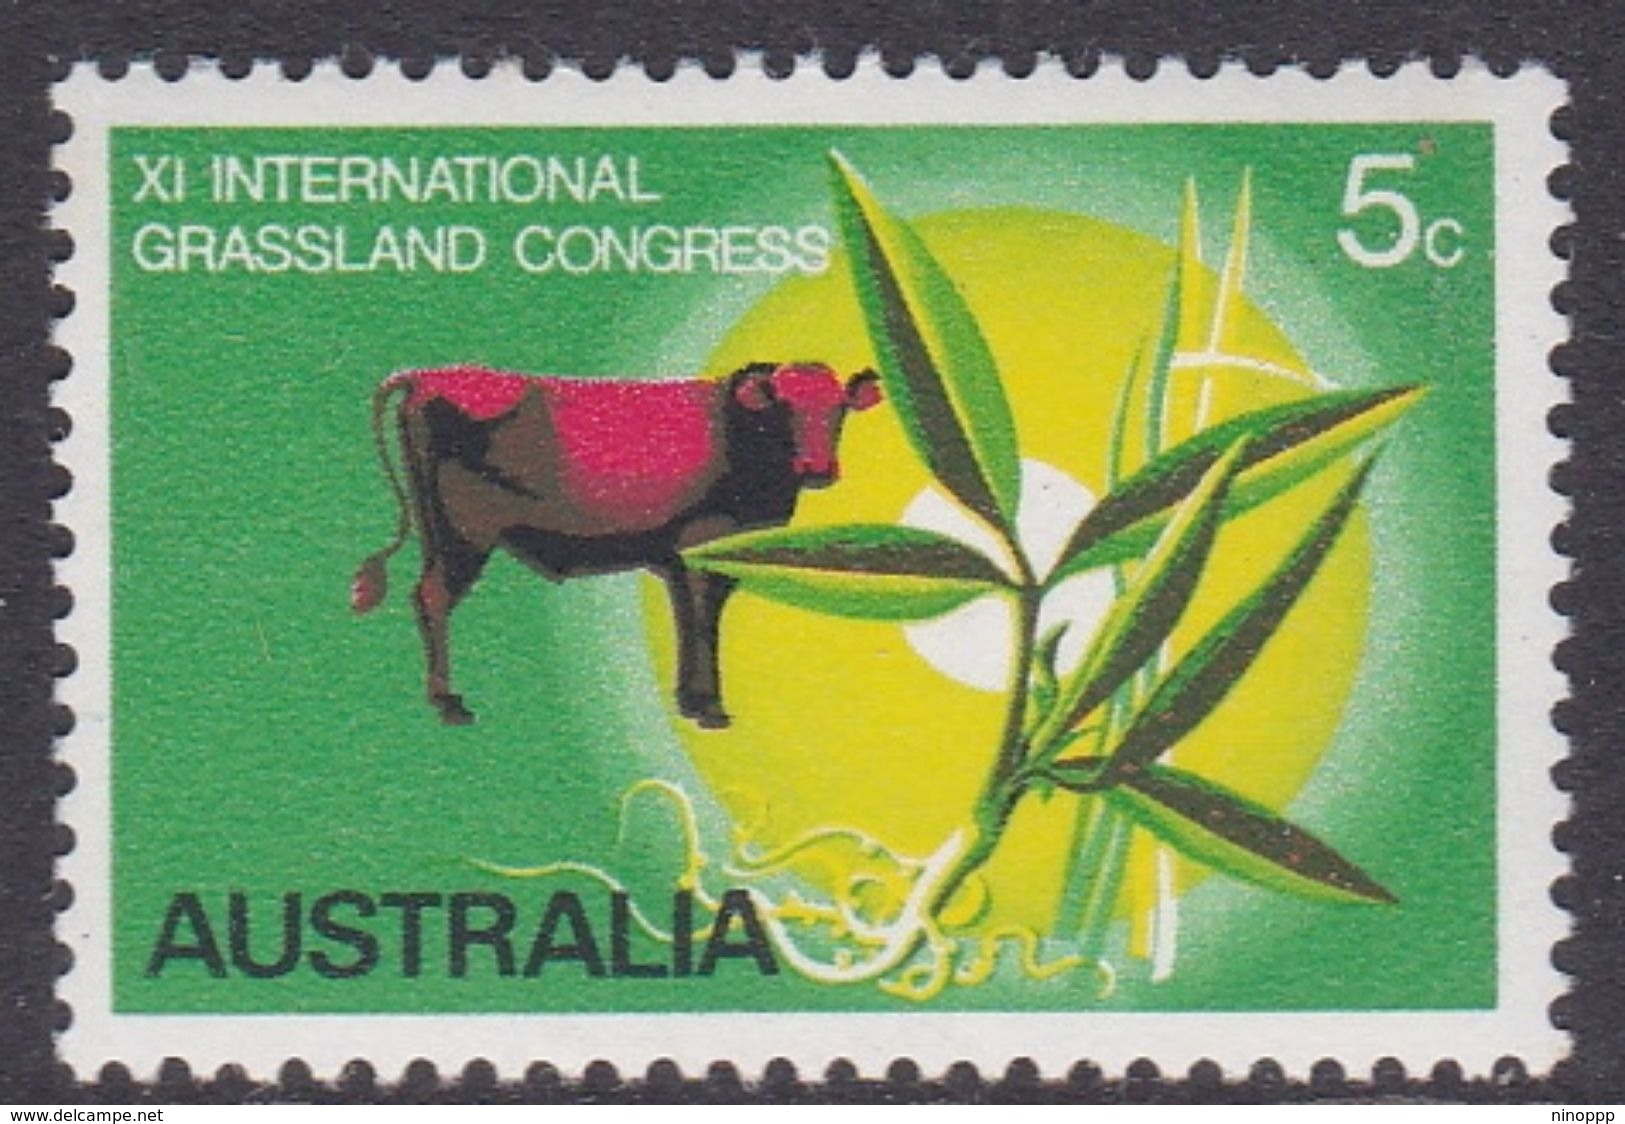 Australia ASC 494 1970 Grassland Congress, Mint Never Hinged - Mint Stamps